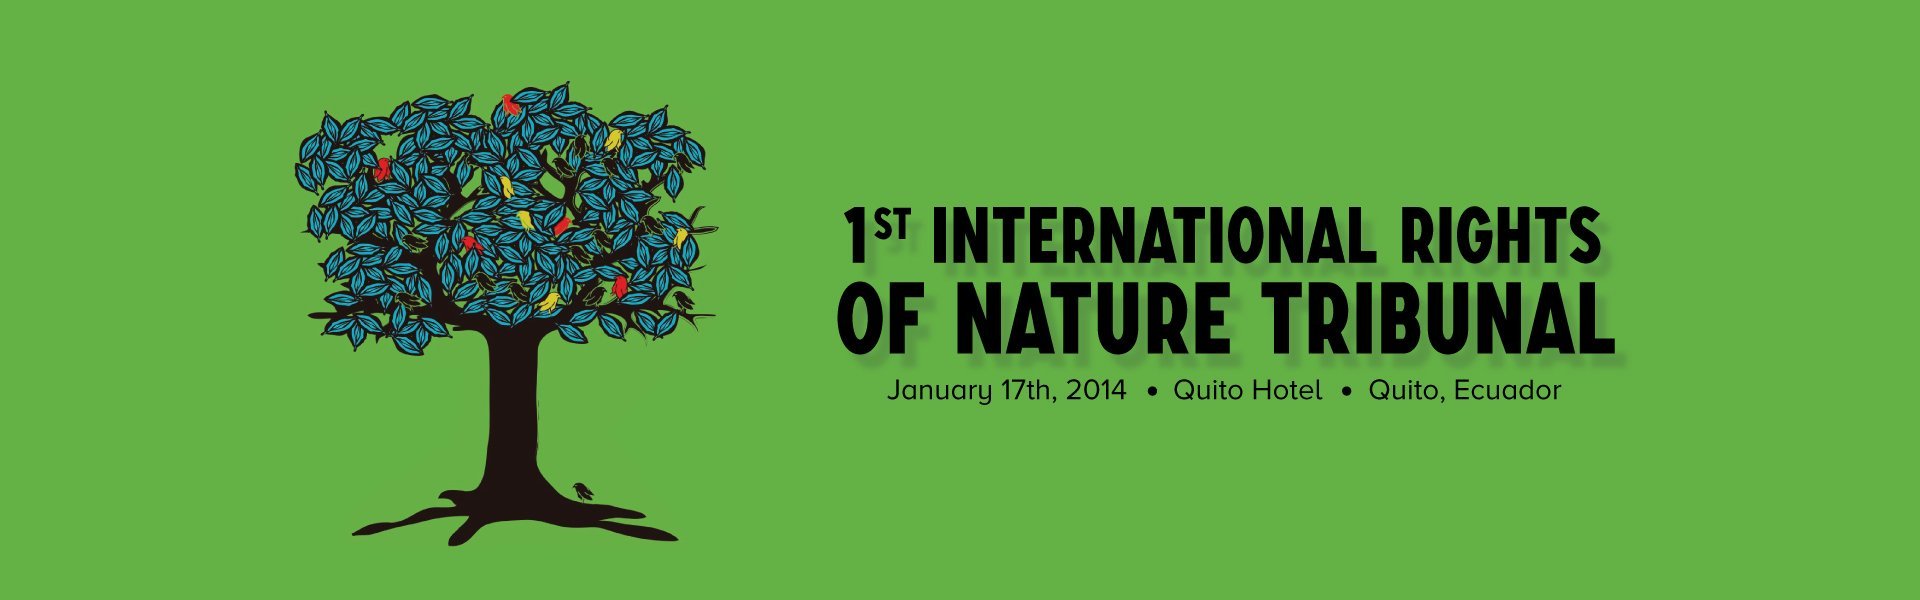 International Rights of Nature Tribunal